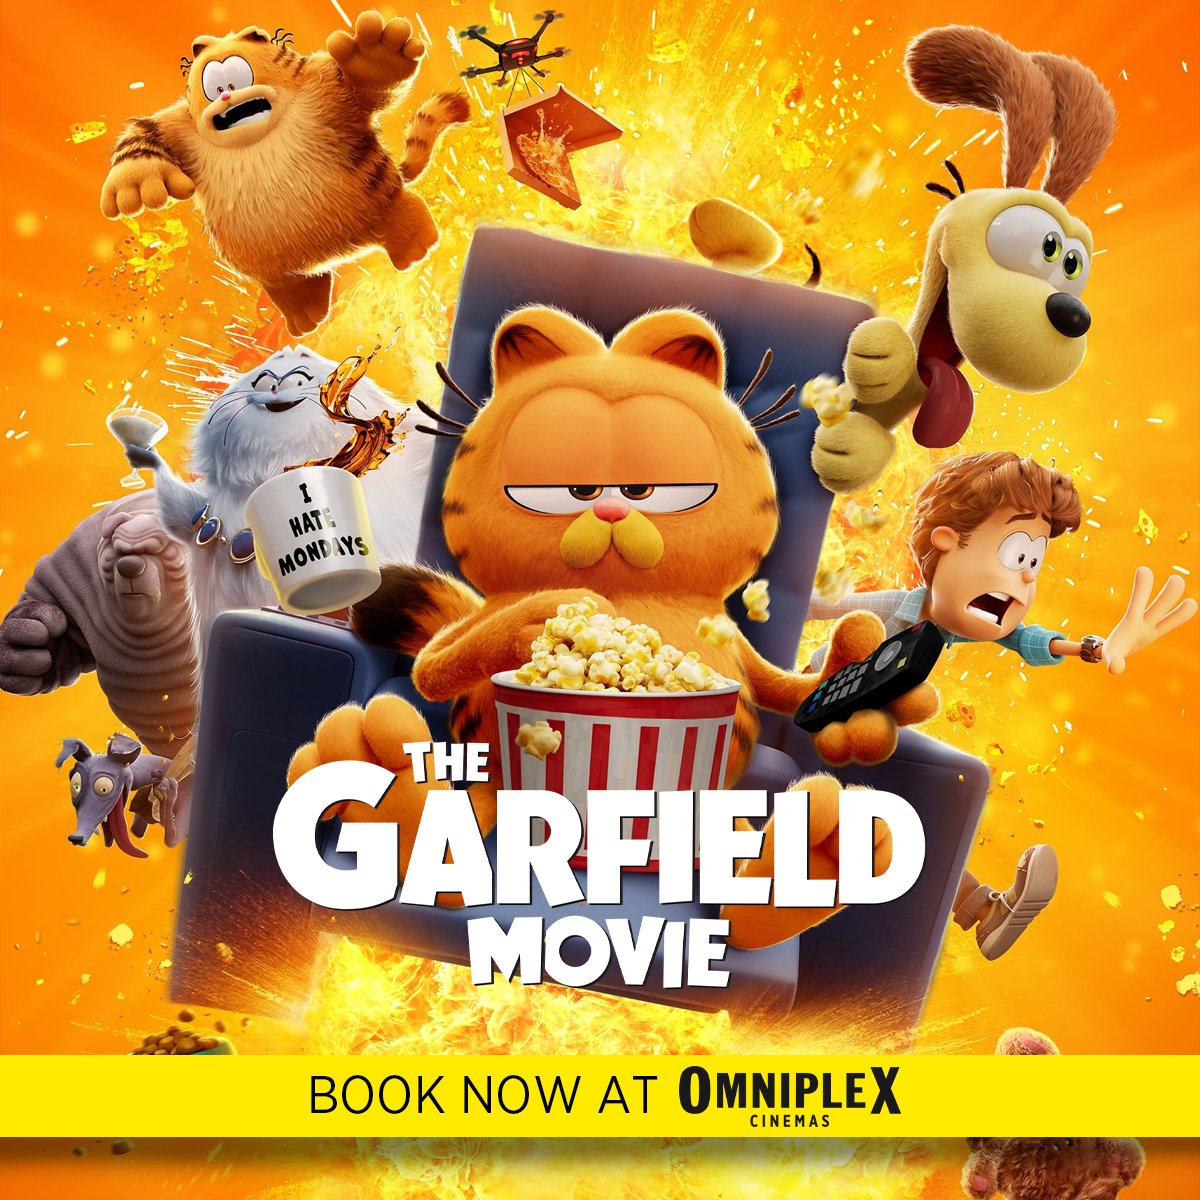 The Garfield Movie He gets bigger. #TheGarfieldMovie features in @omniplexcinema @ClydeShopping from Fri 24 May. Book Now: The Garfield Movie | Cinema Showtimes (omniplexcinemas.co.uk)